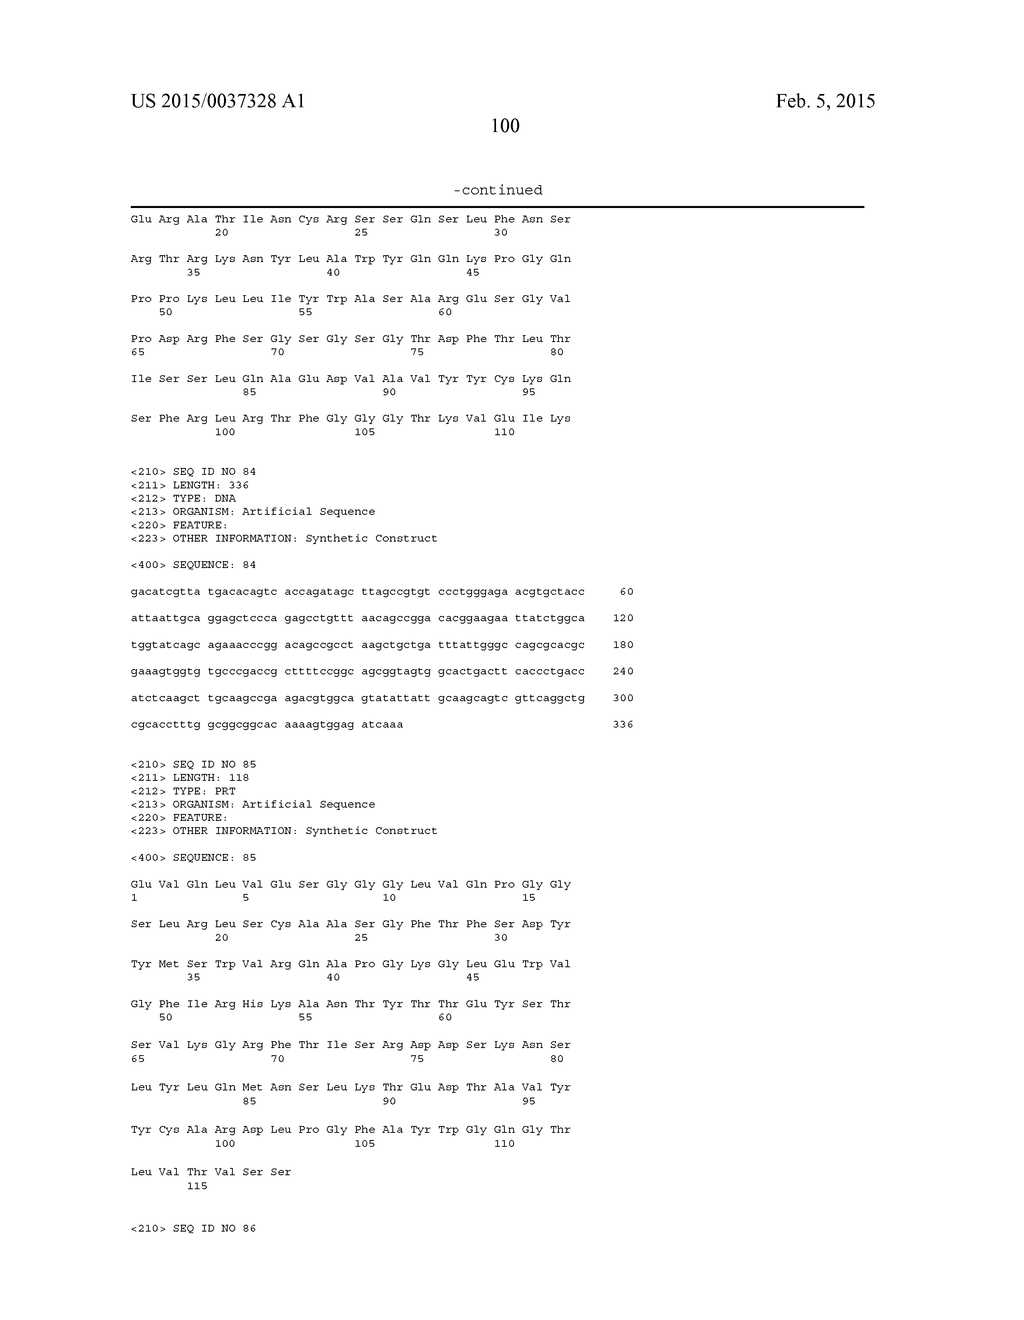 ANTI-CXCR4 ANTIBODIES AND ANTIBODY-DRUG CONJUGATES - diagram, schematic, and image 117